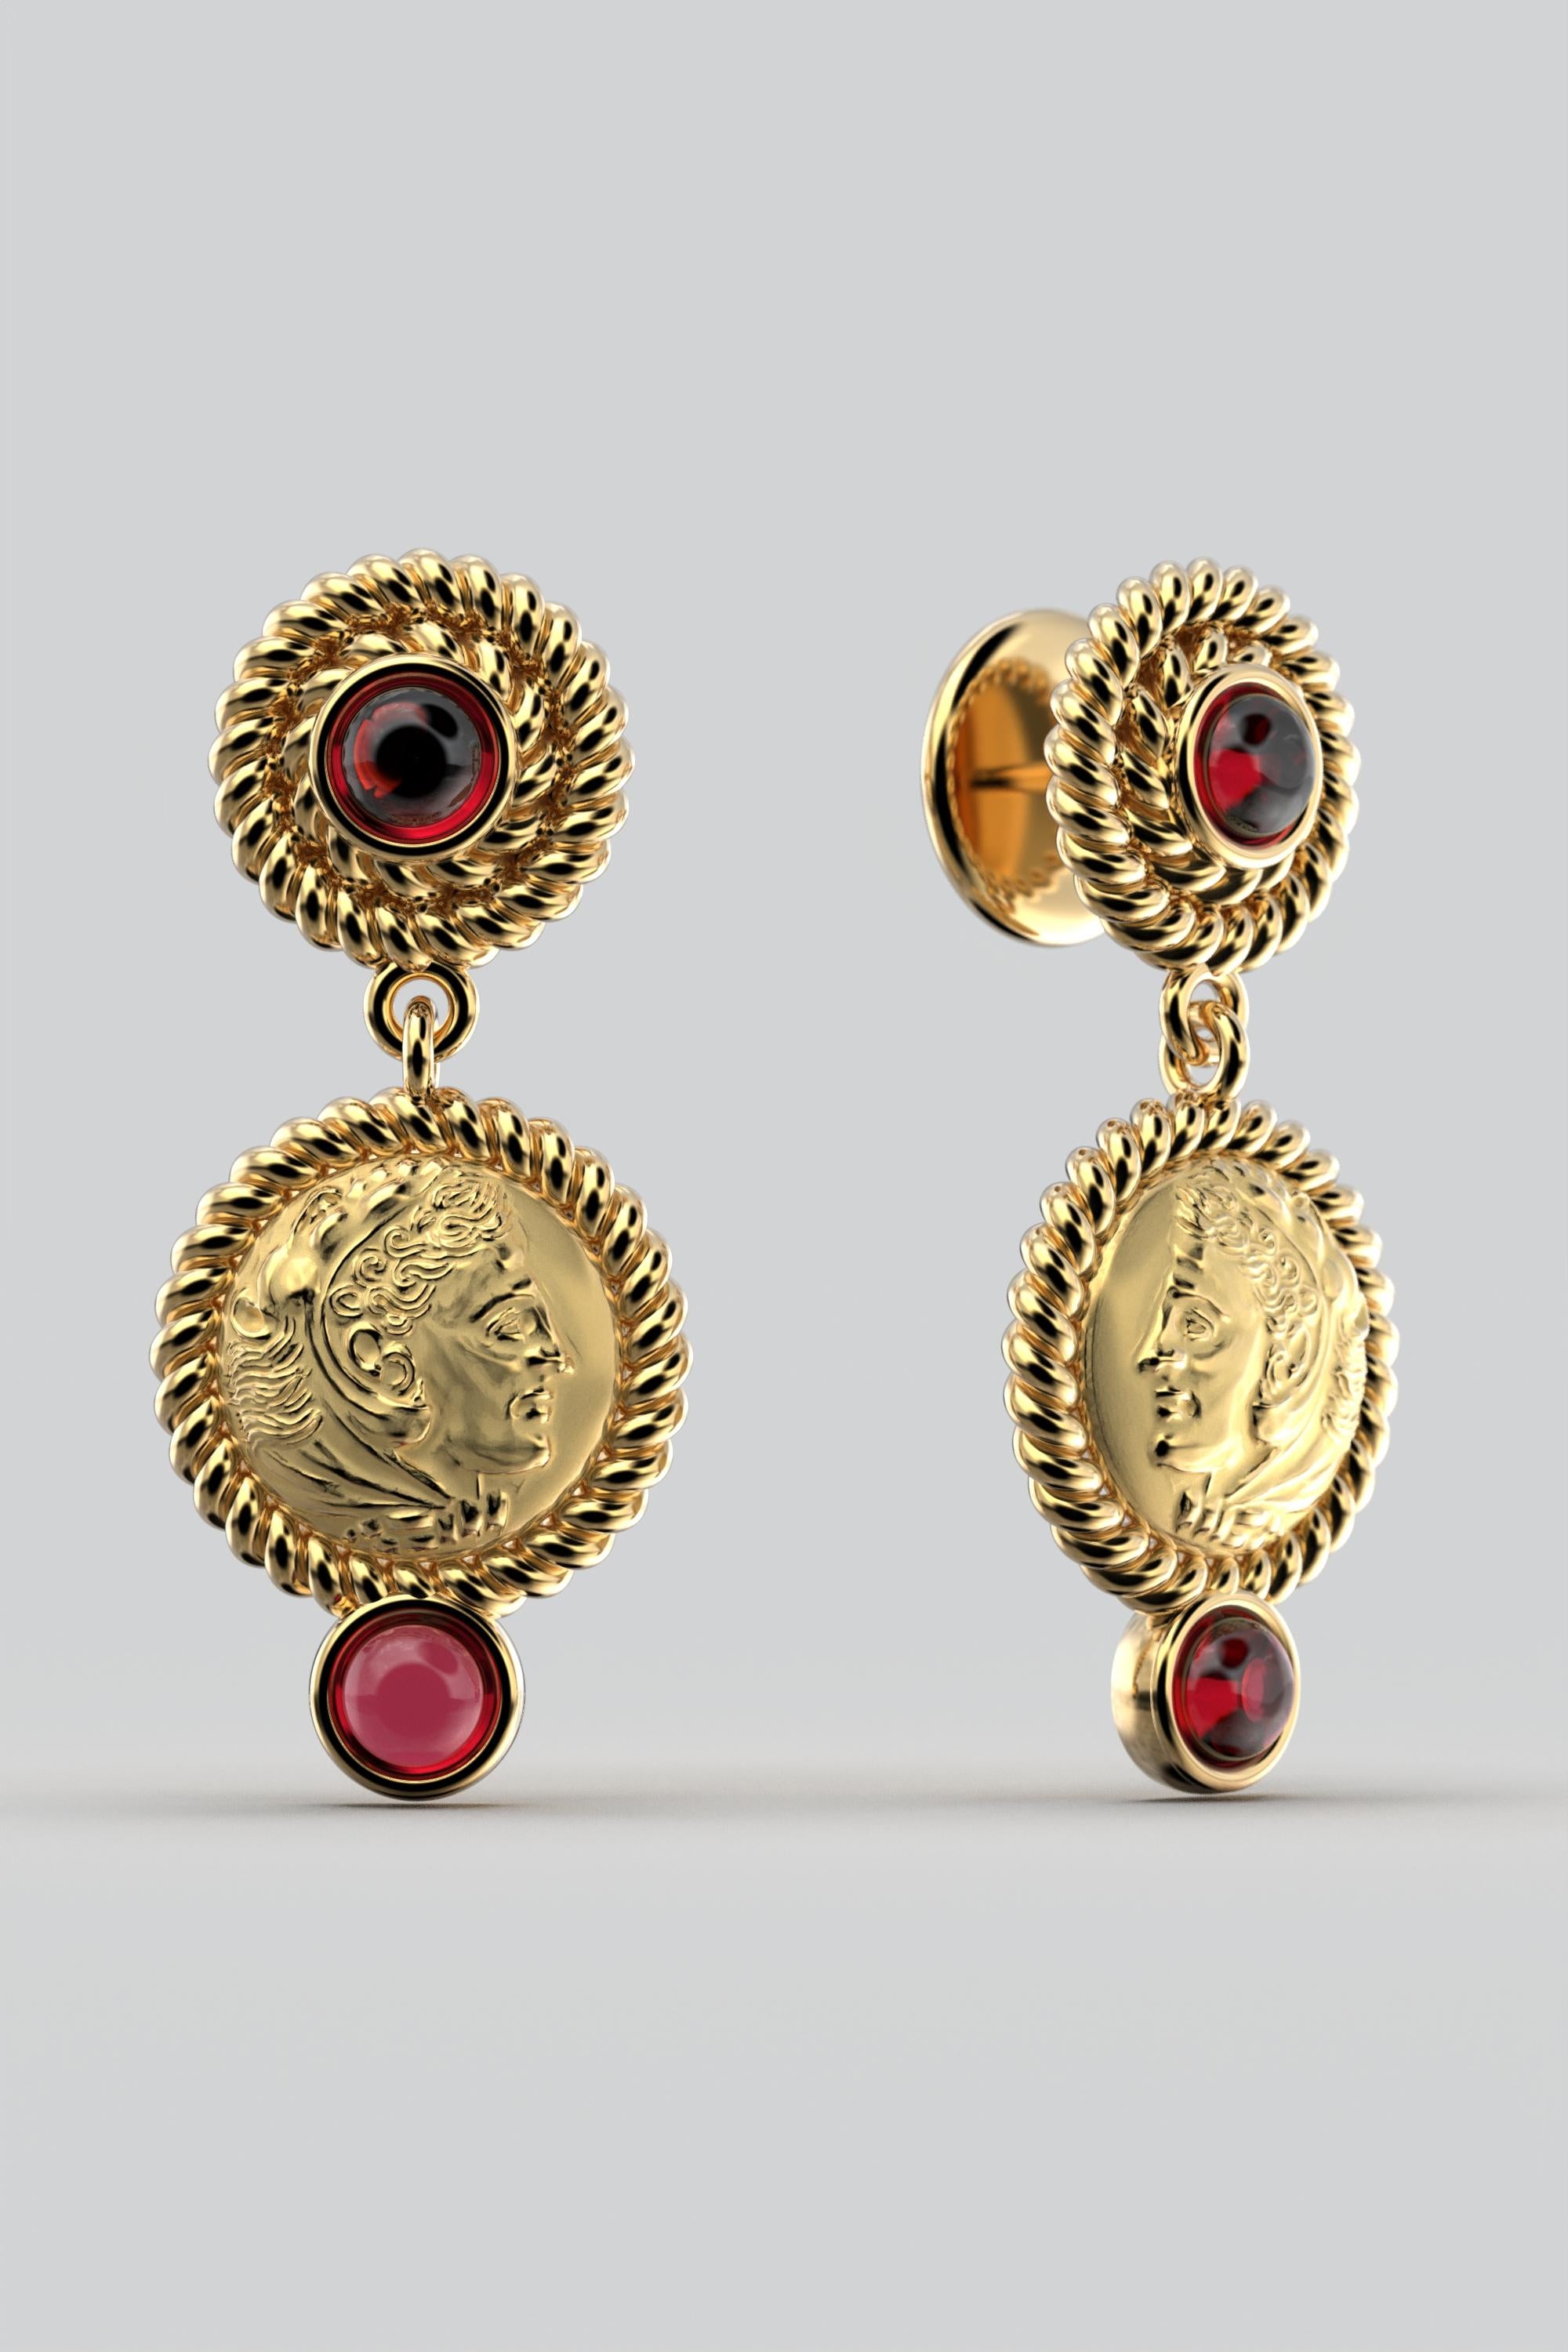 greek inspired jewelry